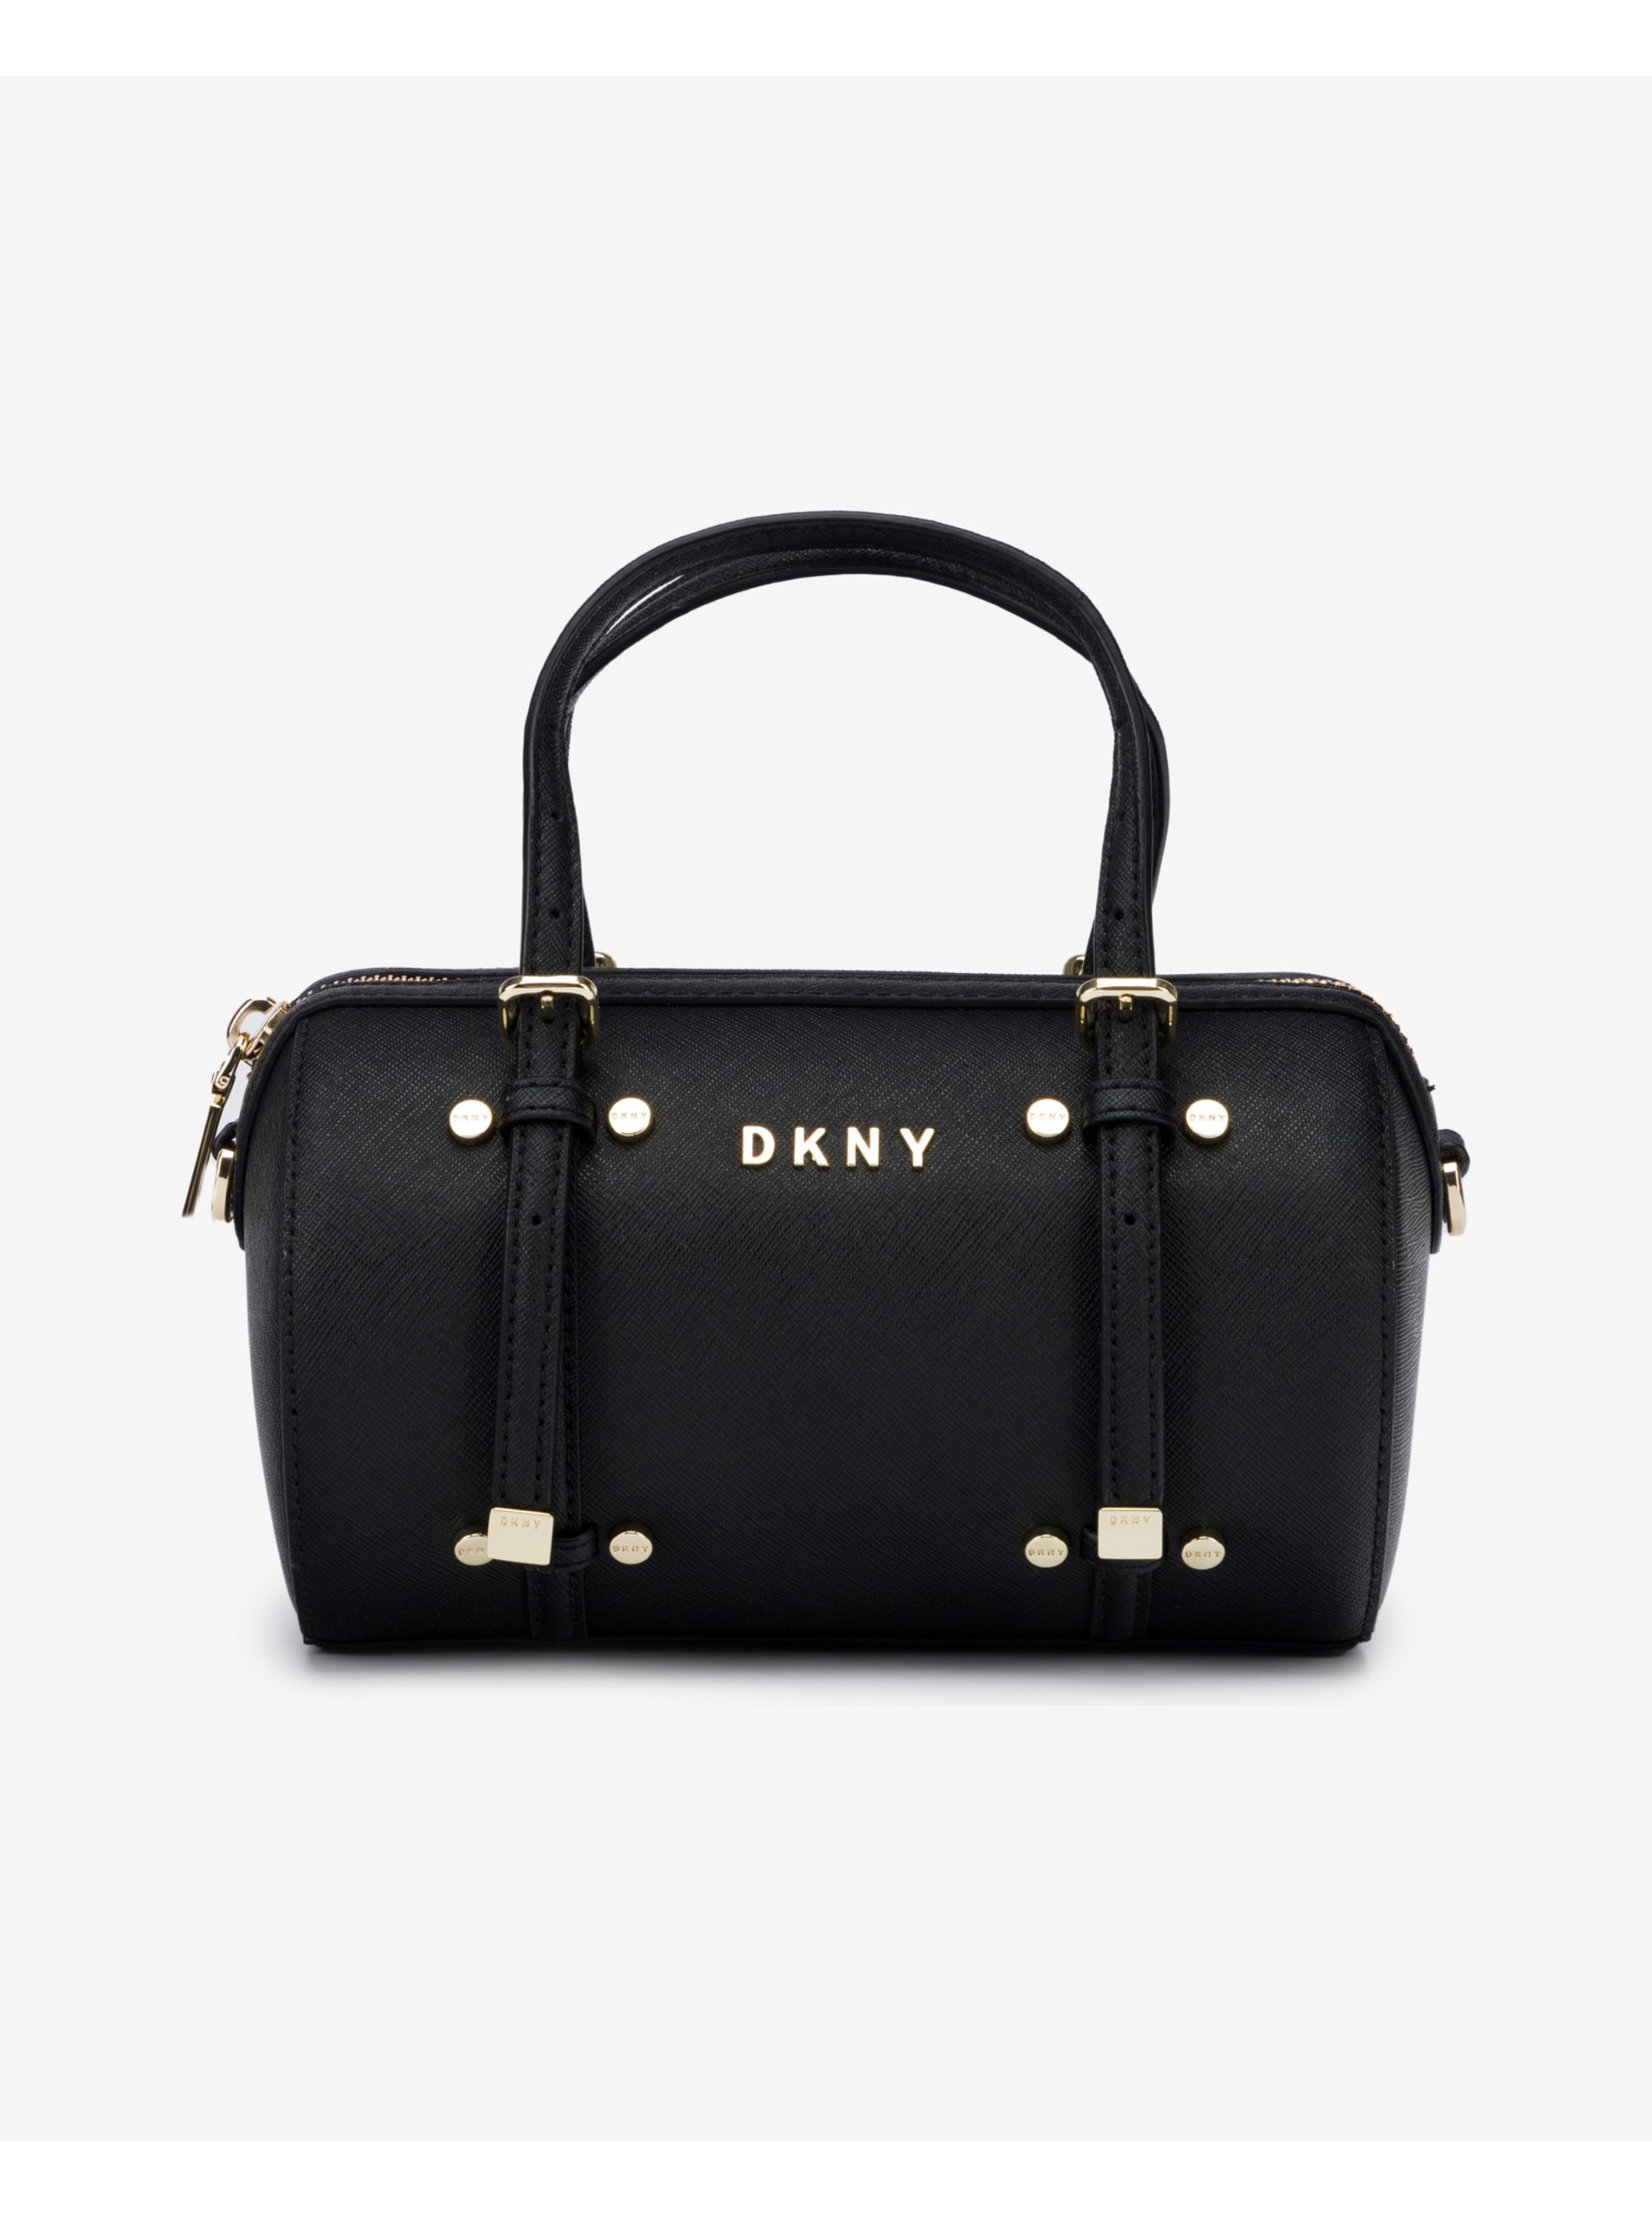 Lacno Bo Duffle Cross body bag DKNY